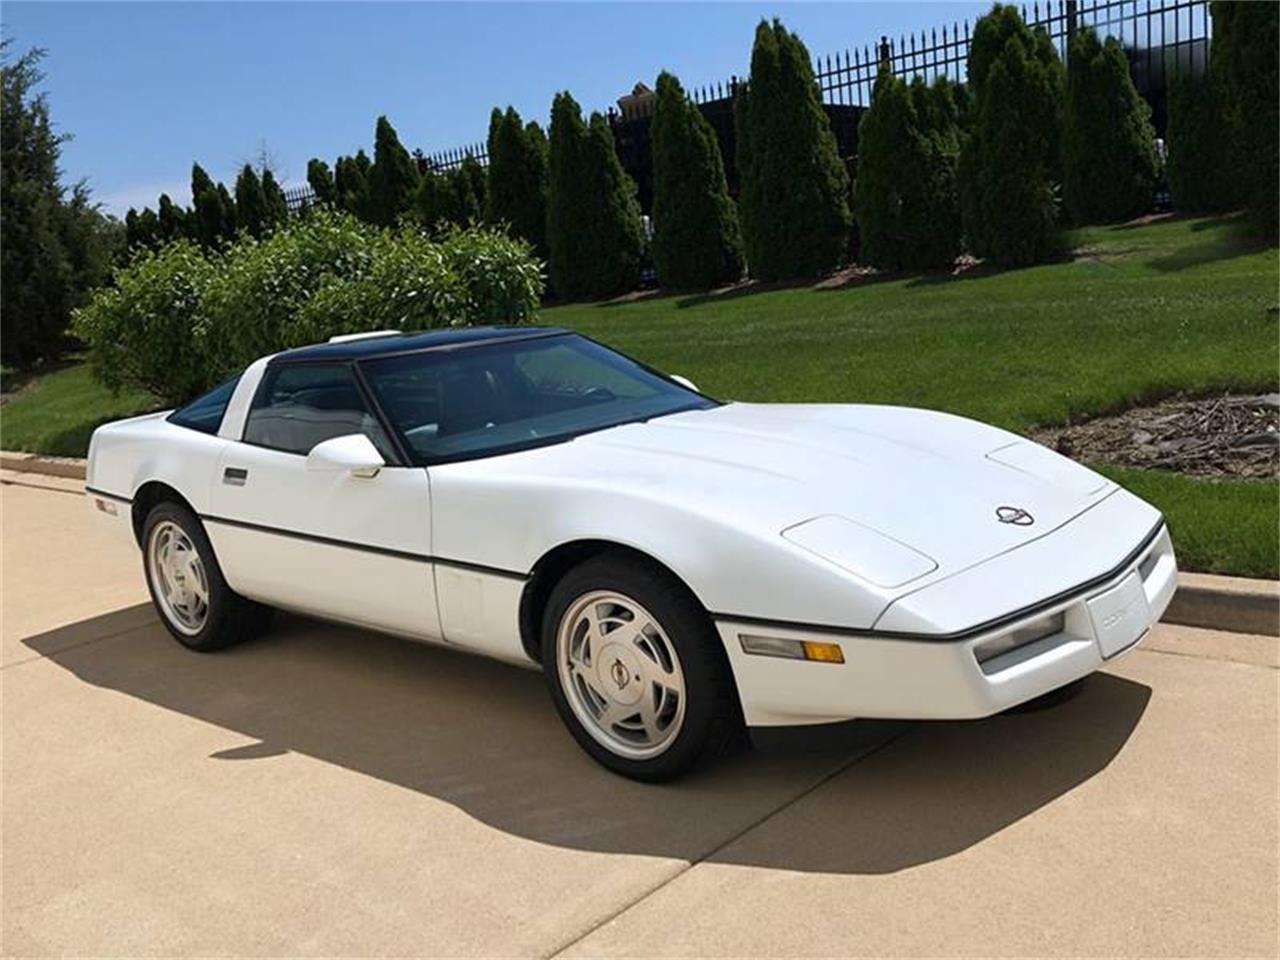 1989 Corvette Performance & Specifications | CorvSport.com